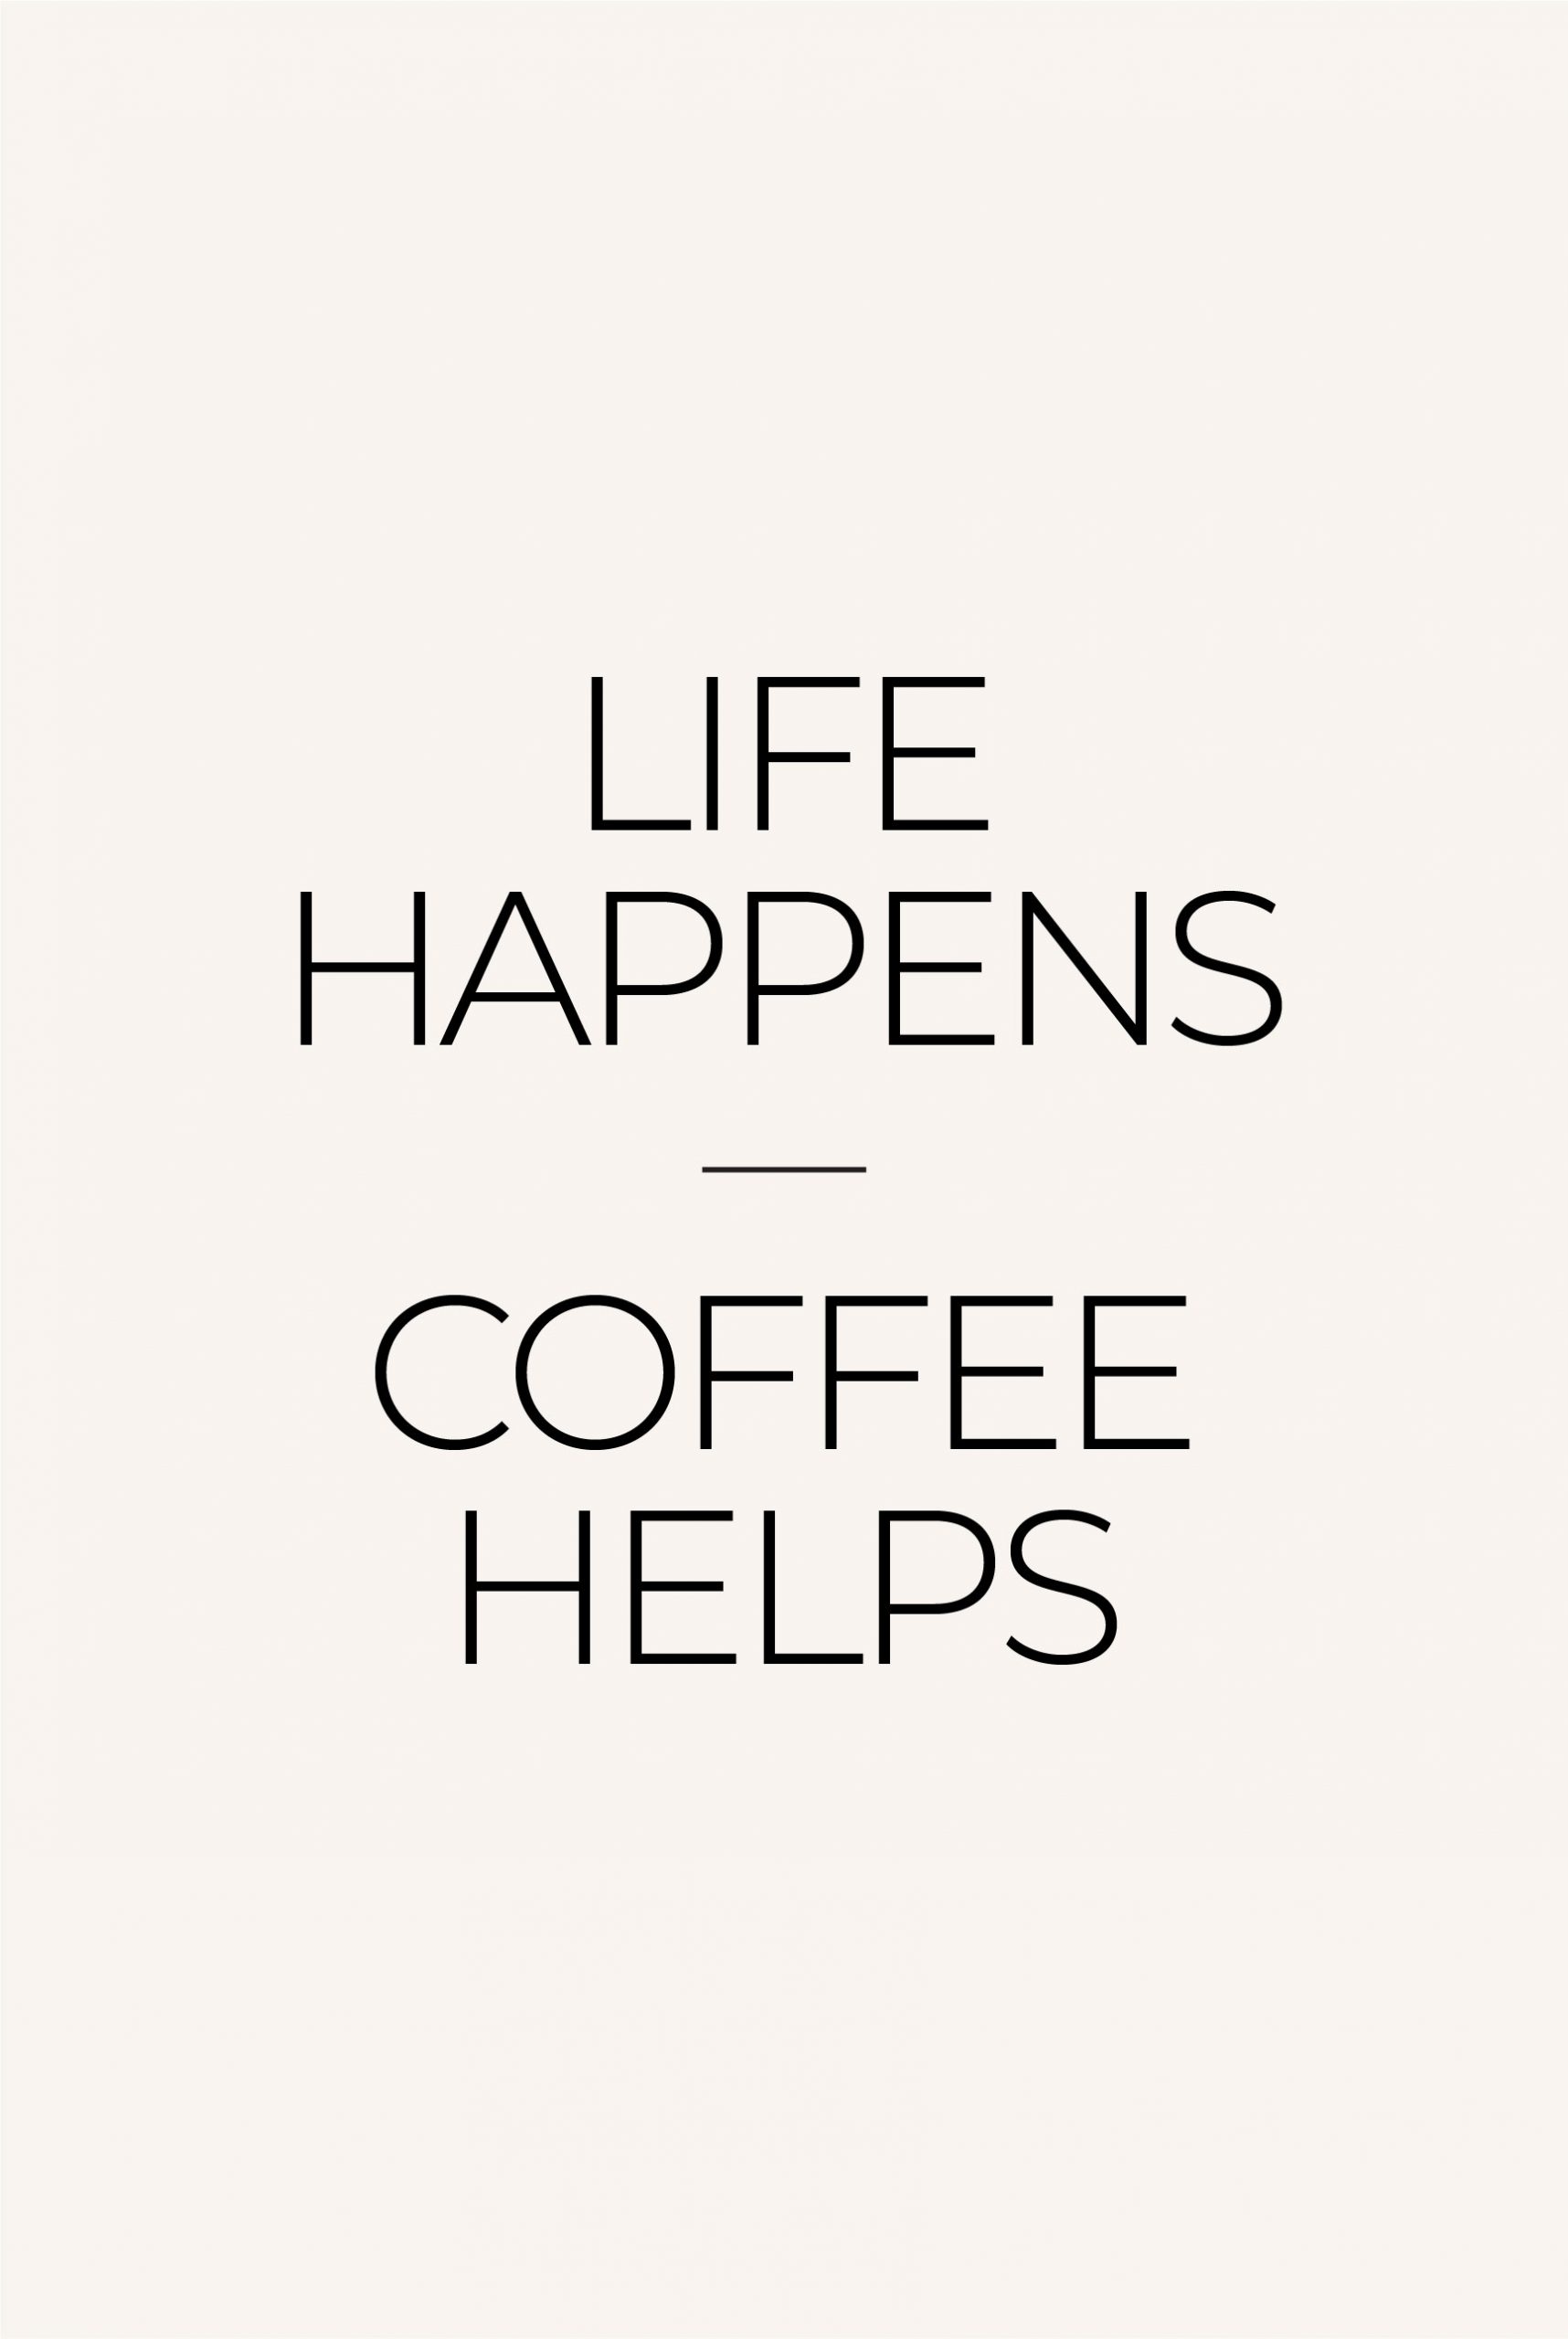 Life happen coffee helps poster